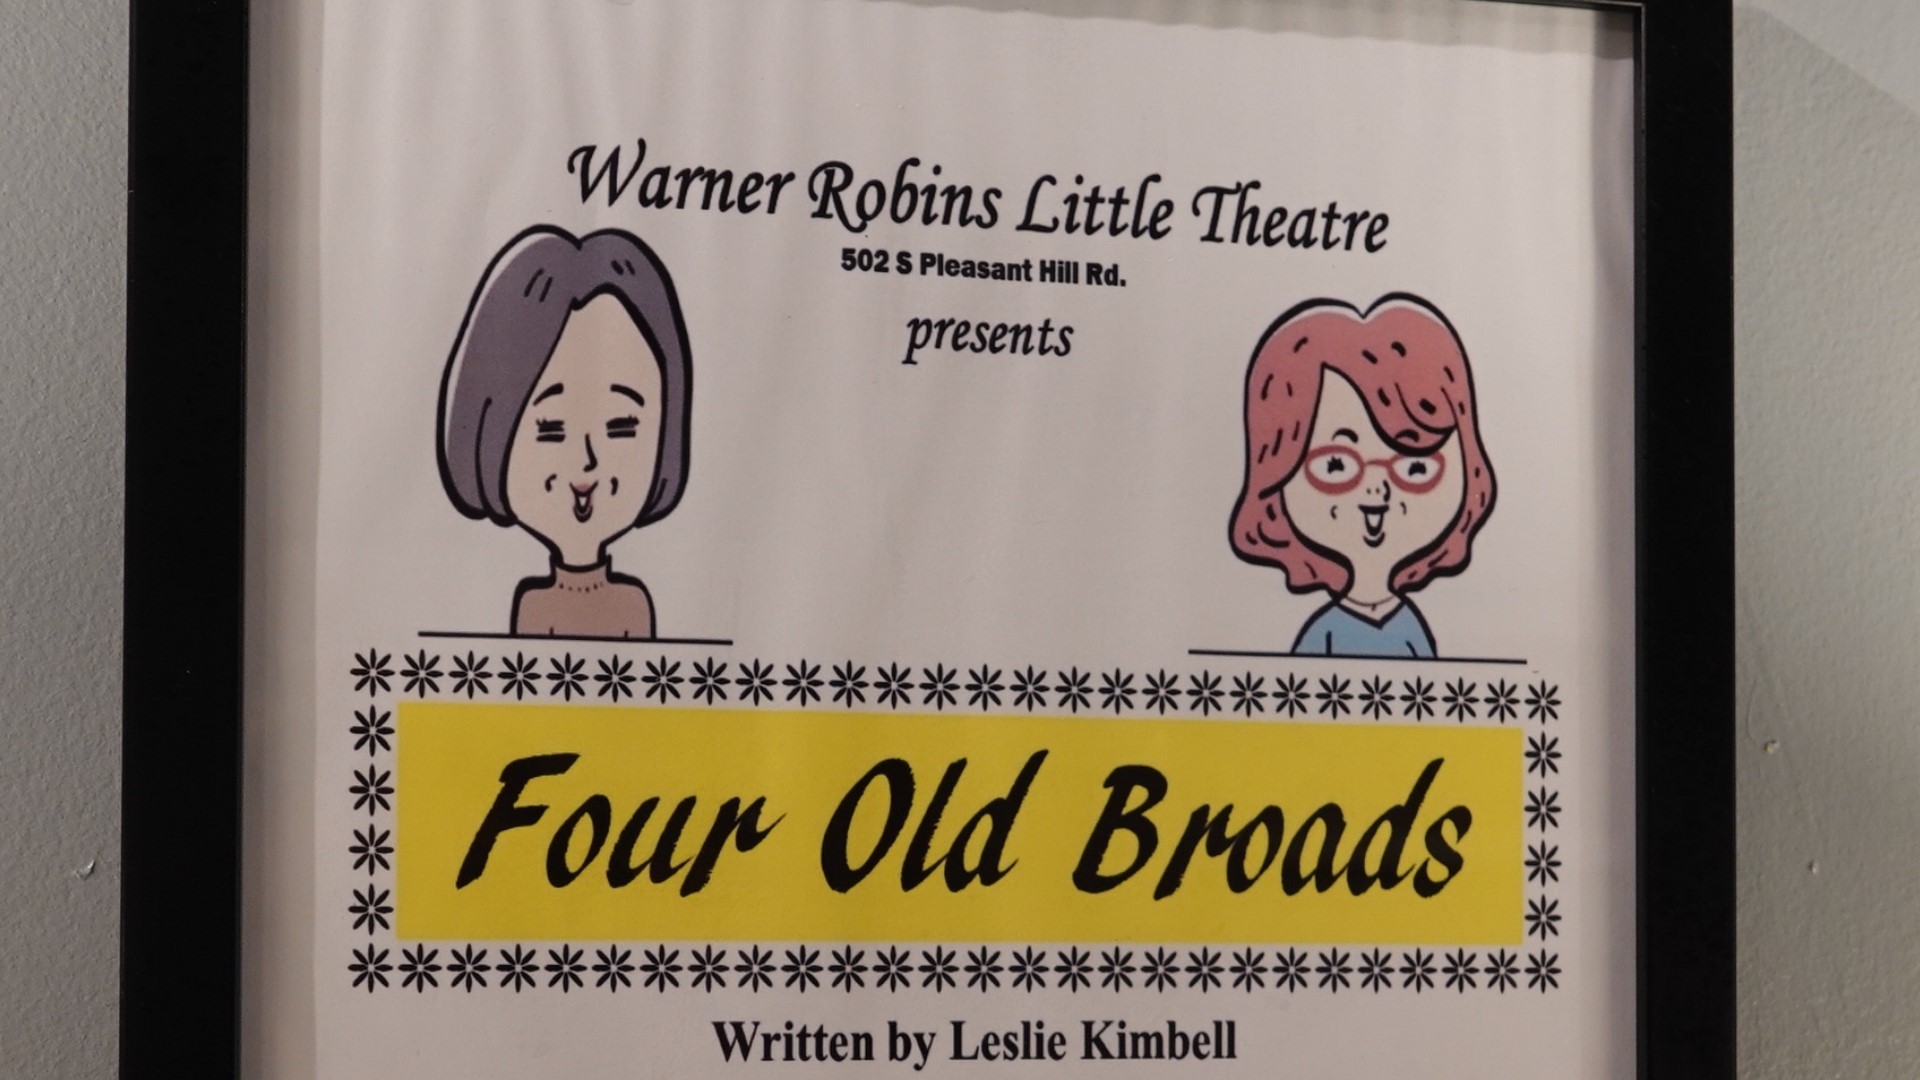 4 Old Broads at Warner Robins Little Theatre